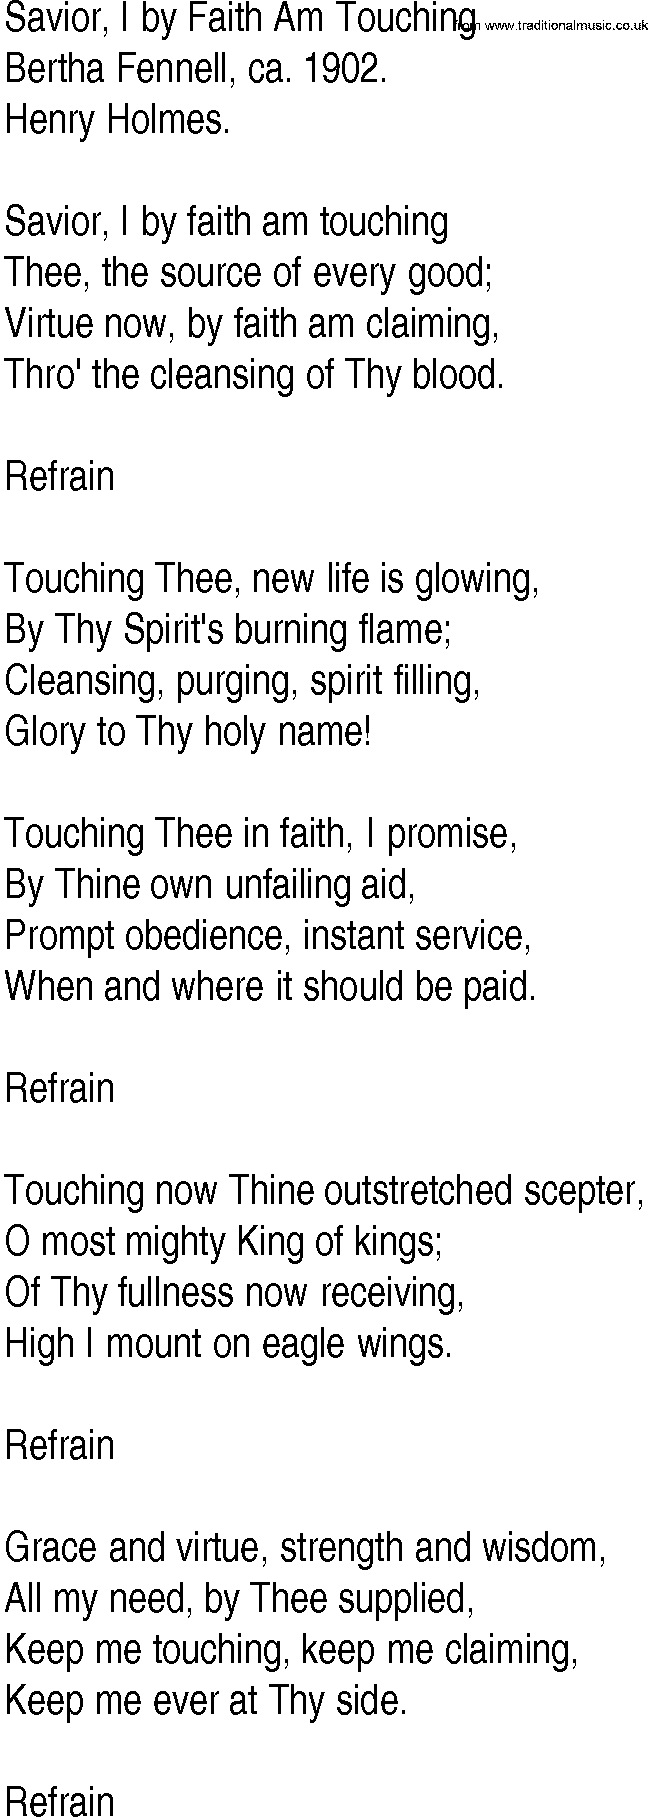 Hymn and Gospel Song: Savior, I by Faith Am Touching by Bertha Fennell ca lyrics